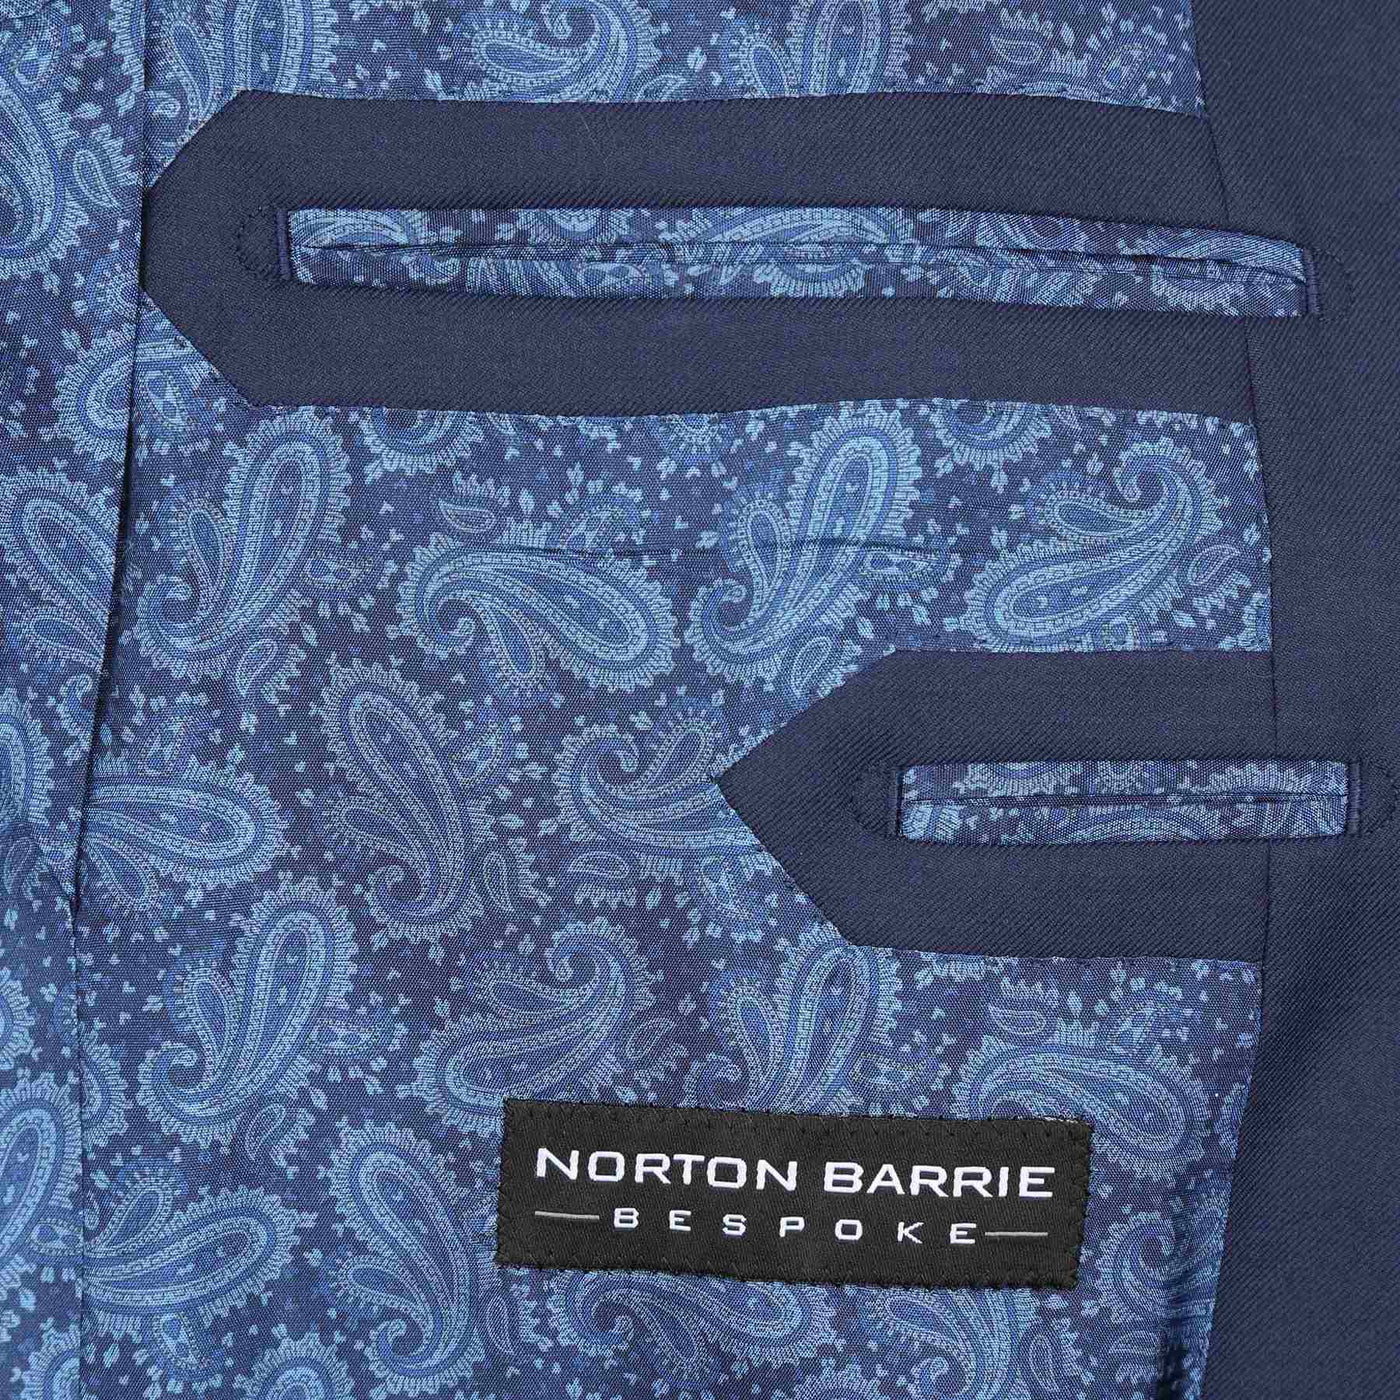 Norton Barrie Bespoke Suit in Navy Inside Pocket